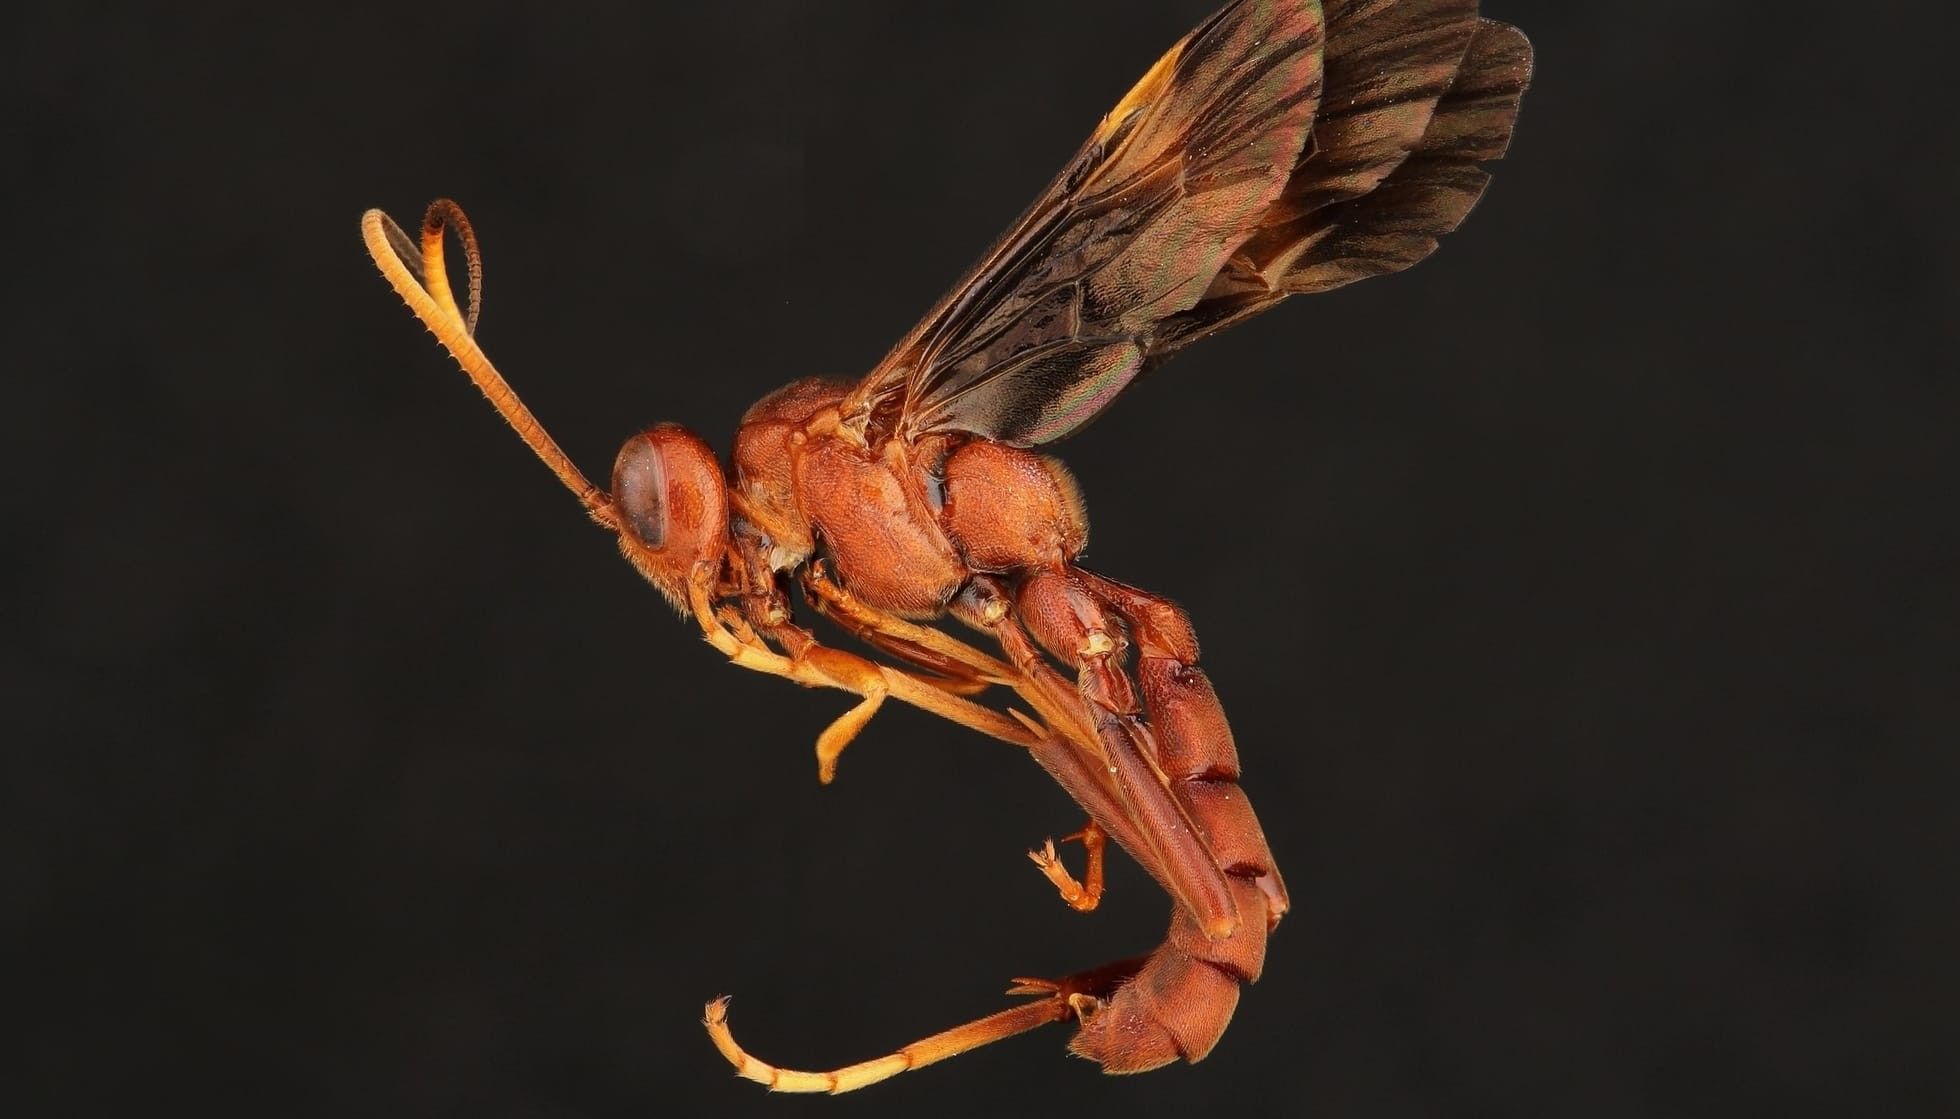 Fun Giant Ichneumon Wasp Facts For Kids | Kidadl